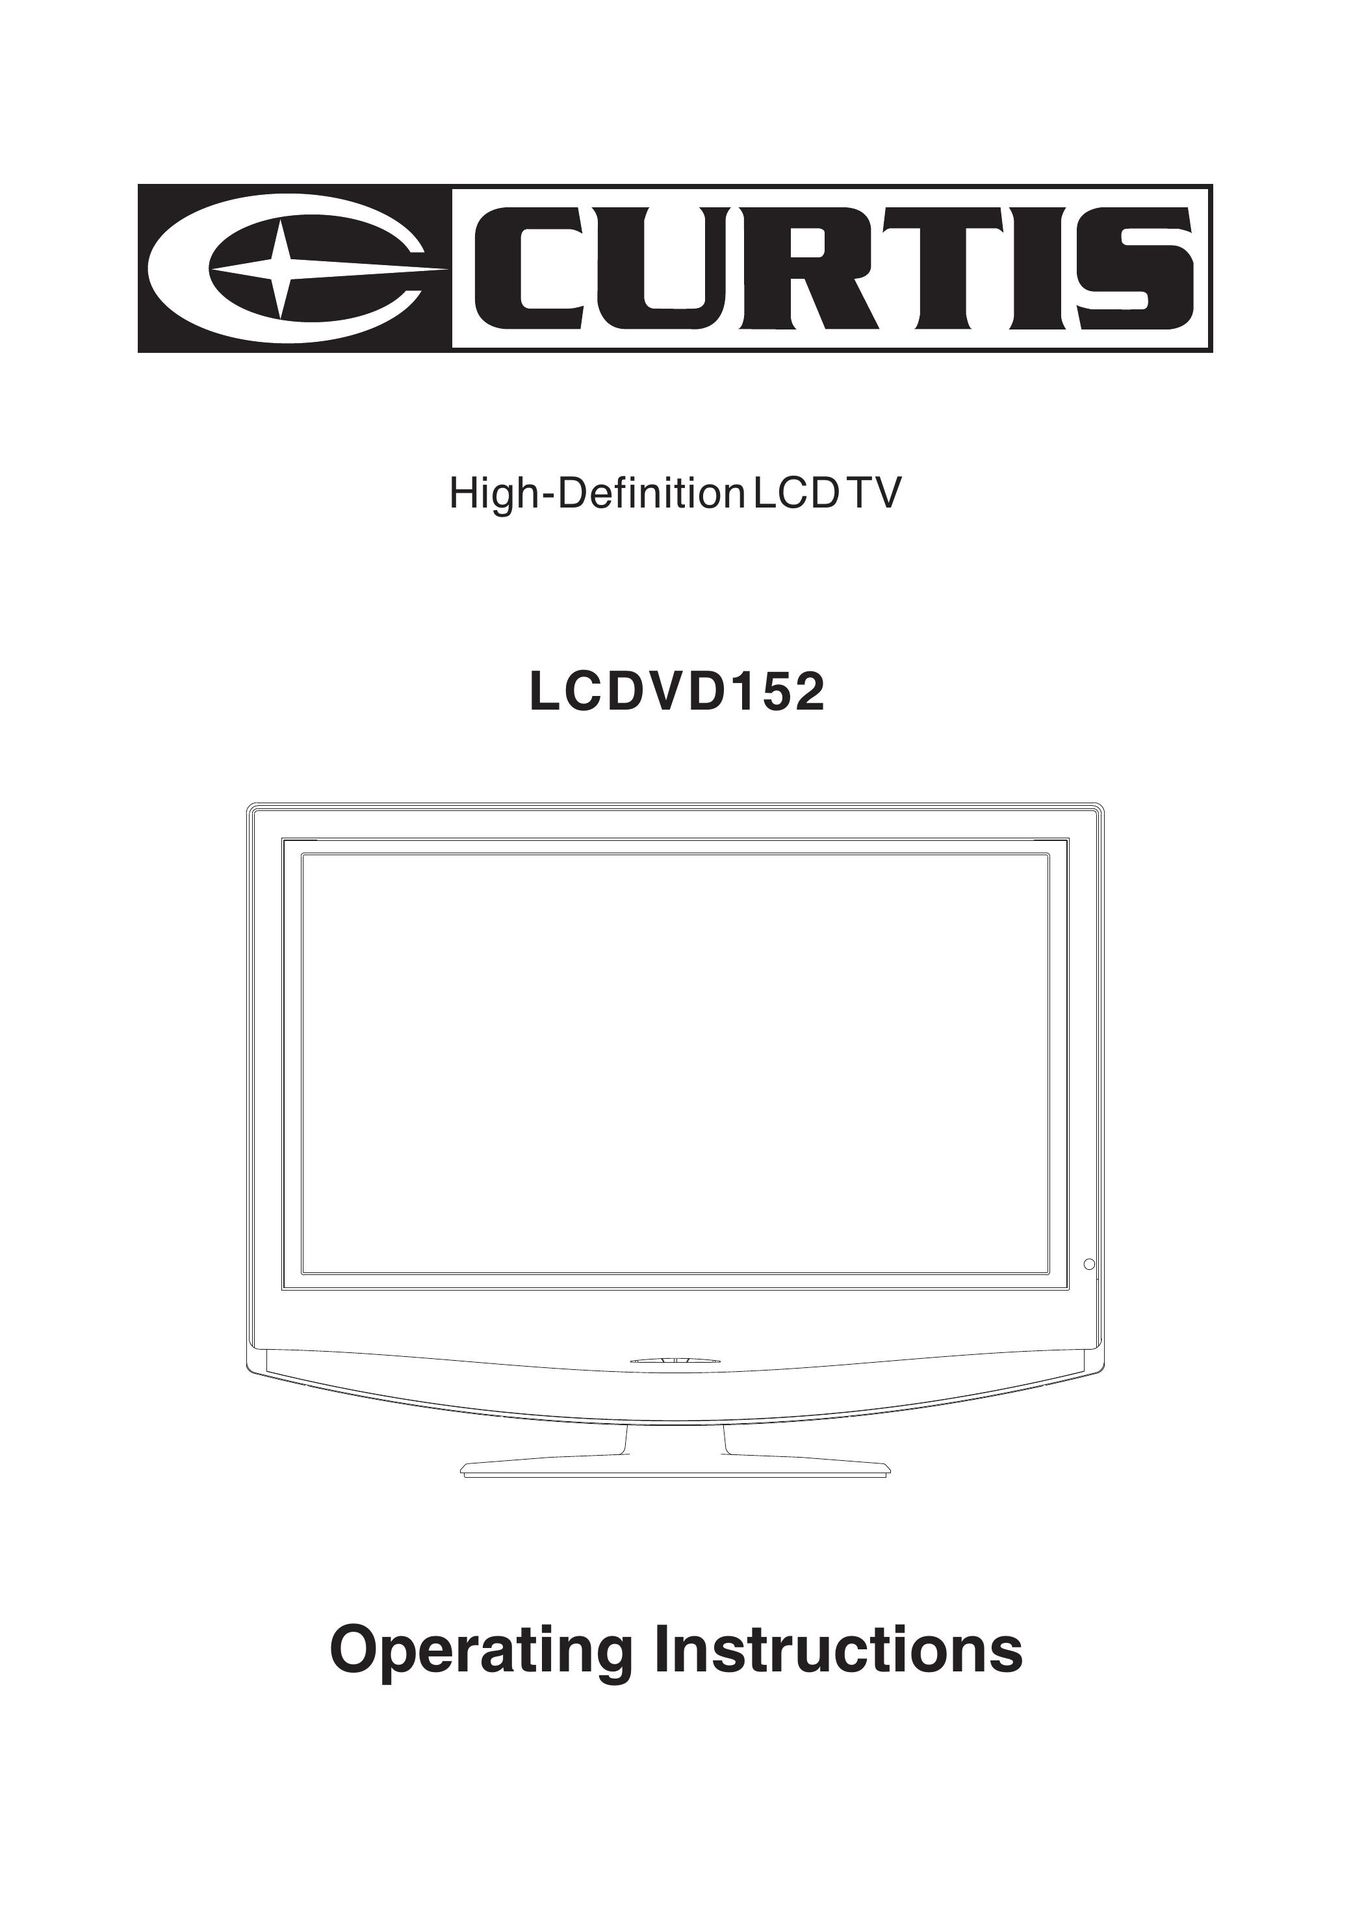 Curtis LCDVD152 Flat Panel Television User Manual